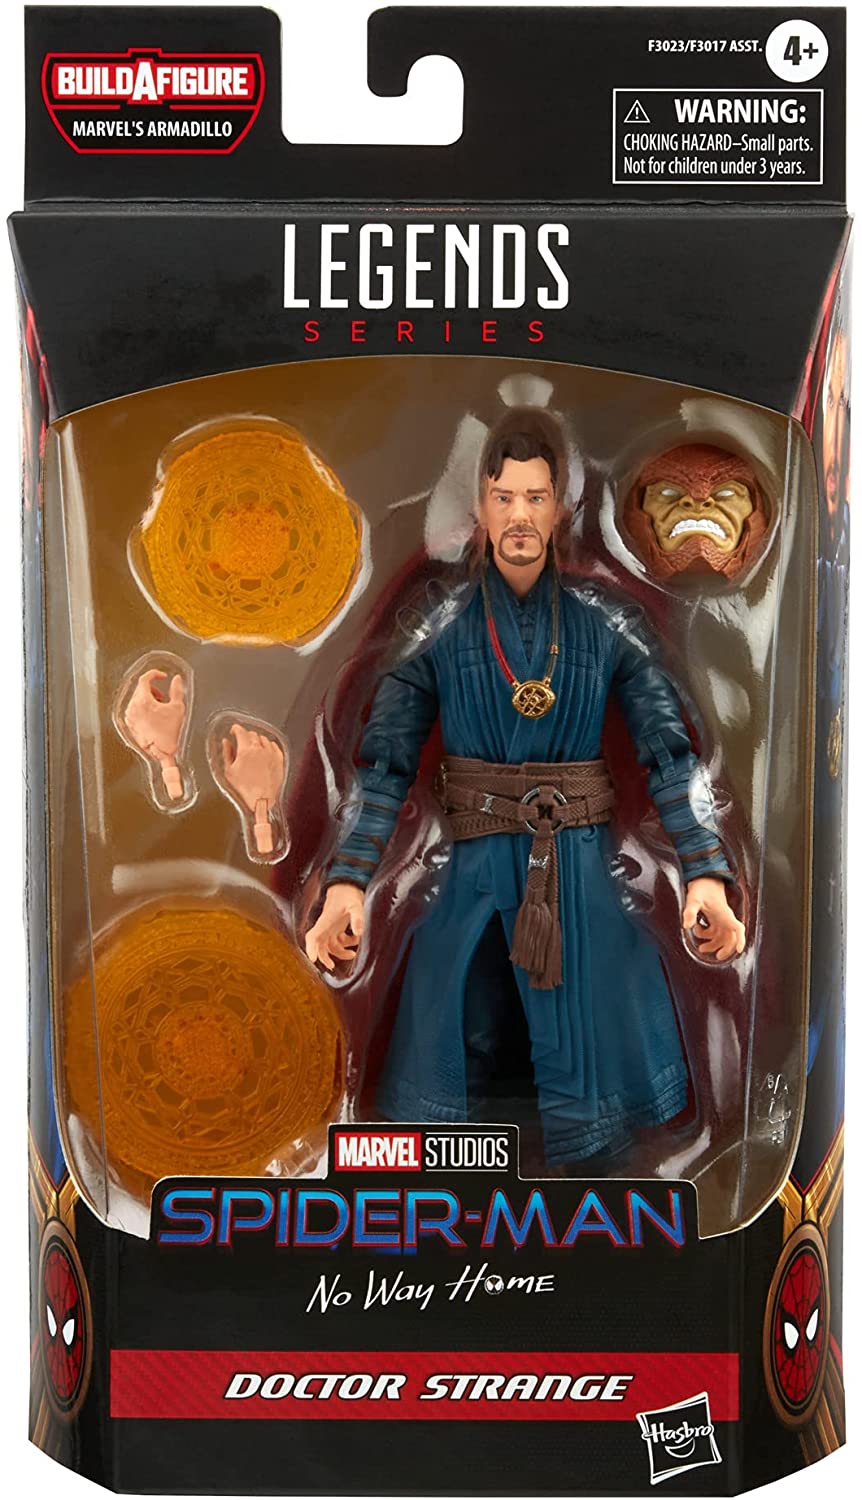 Spider-Man Marvel Legends Series Doctor Strange 6-inch Collectible Action Figure